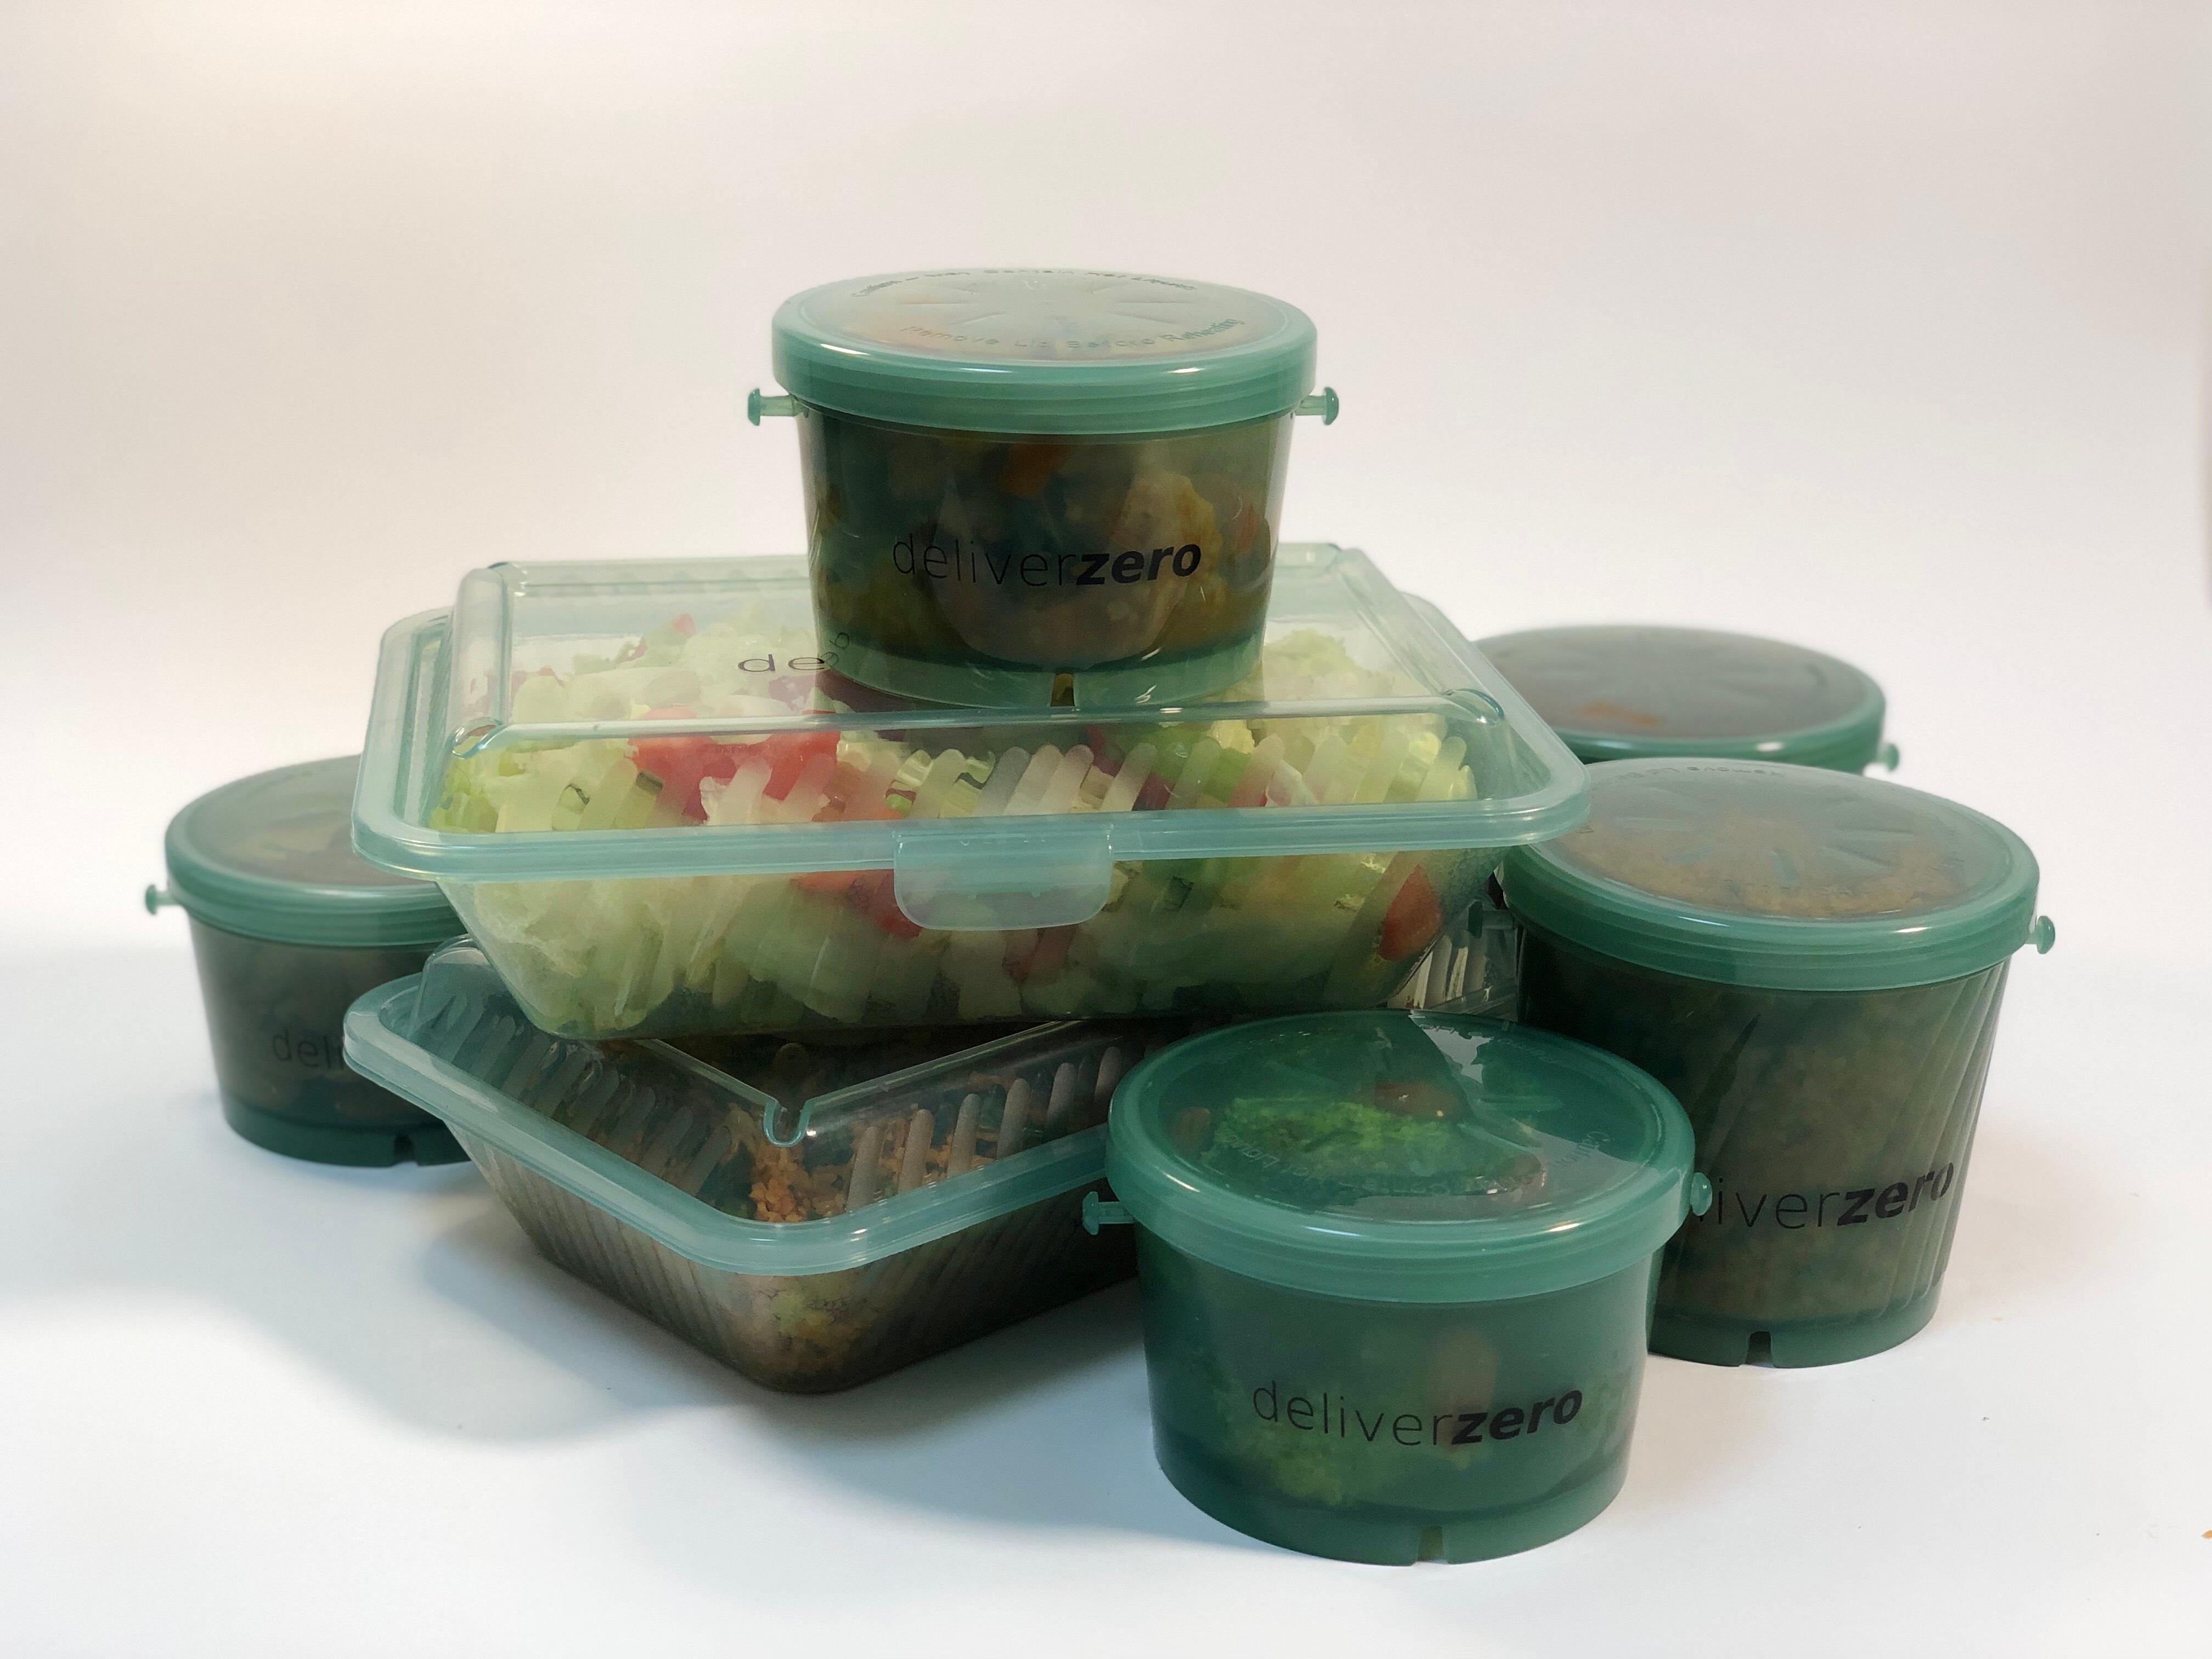 Blue Park Kitchen -- Midtown - Use DeliverZero reusable containers, please